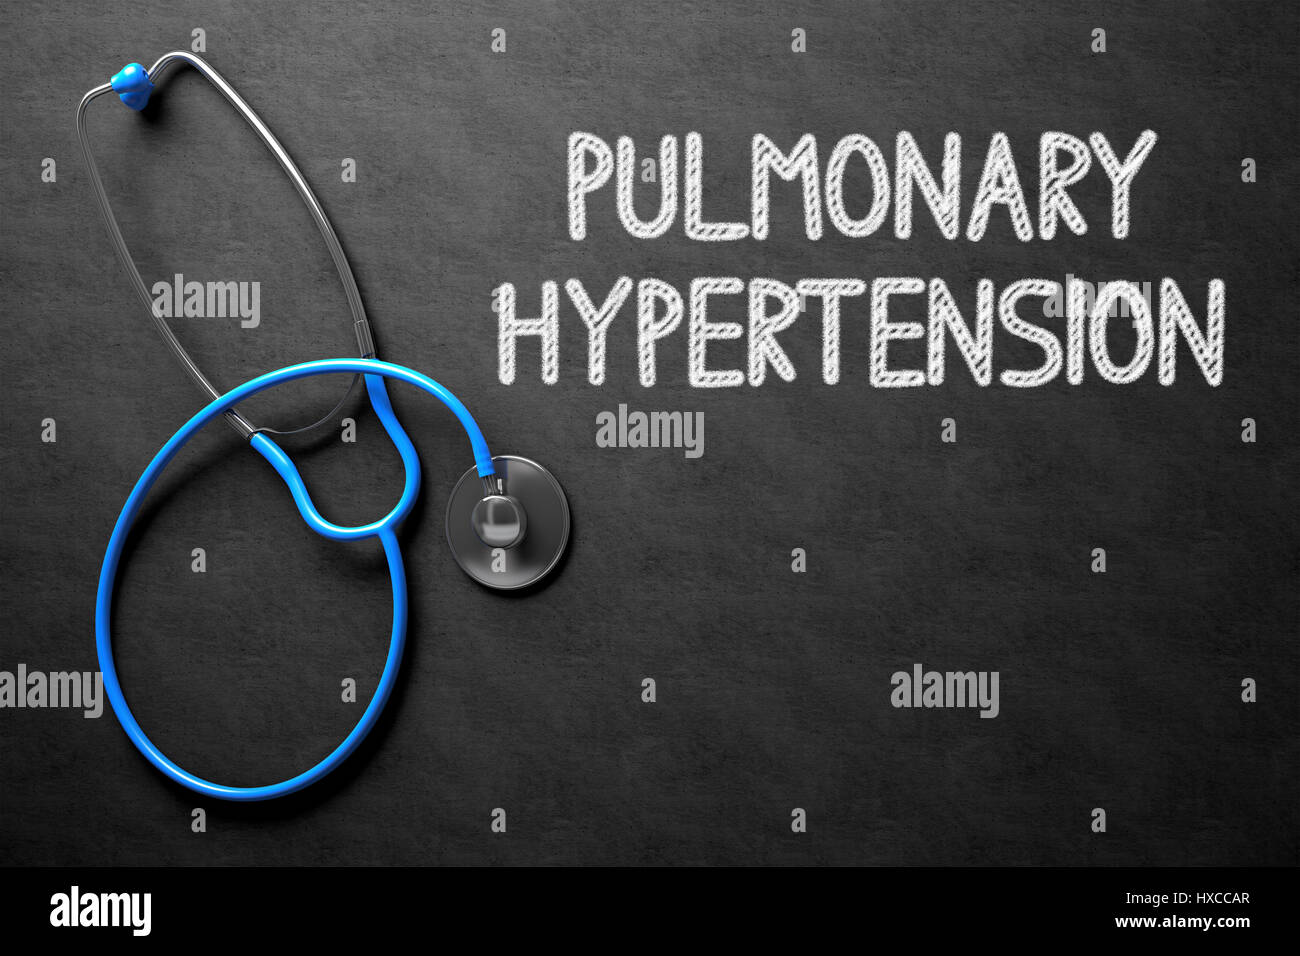 Pulmonary Hypertension on Chalkboard. 3D Illustration. Stock Photo